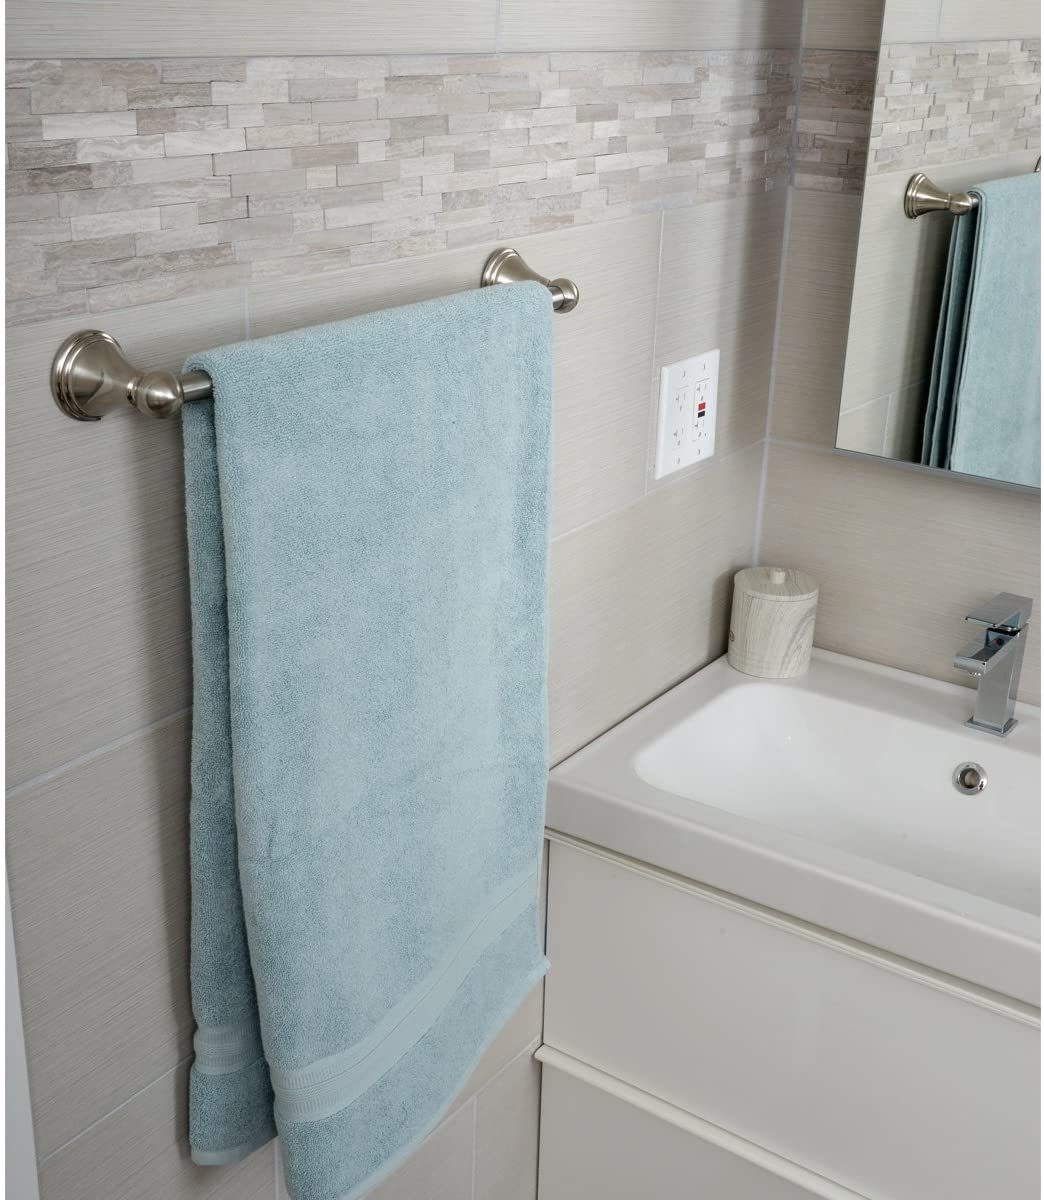 Nickel Brushed Chrome Ss Metal Bathroom 5 PCS Set Towel Bar